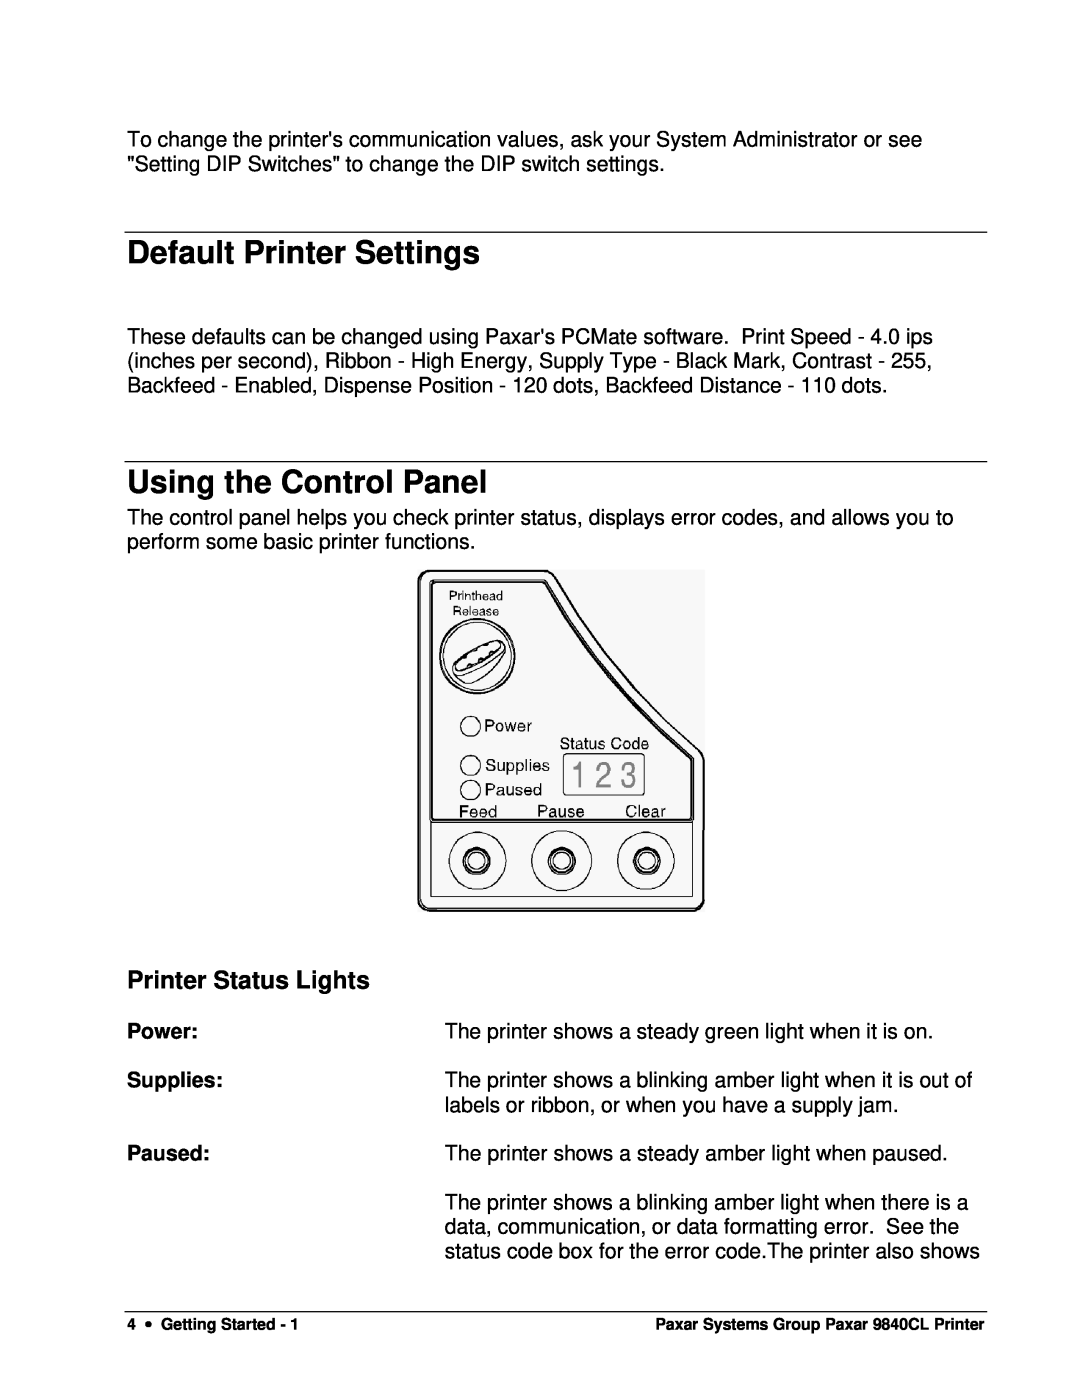 Paxar 9840CL user manual Default Printer Settings, Using the Control Panel, Printer Status Lights, Power, Supplies, Paused 